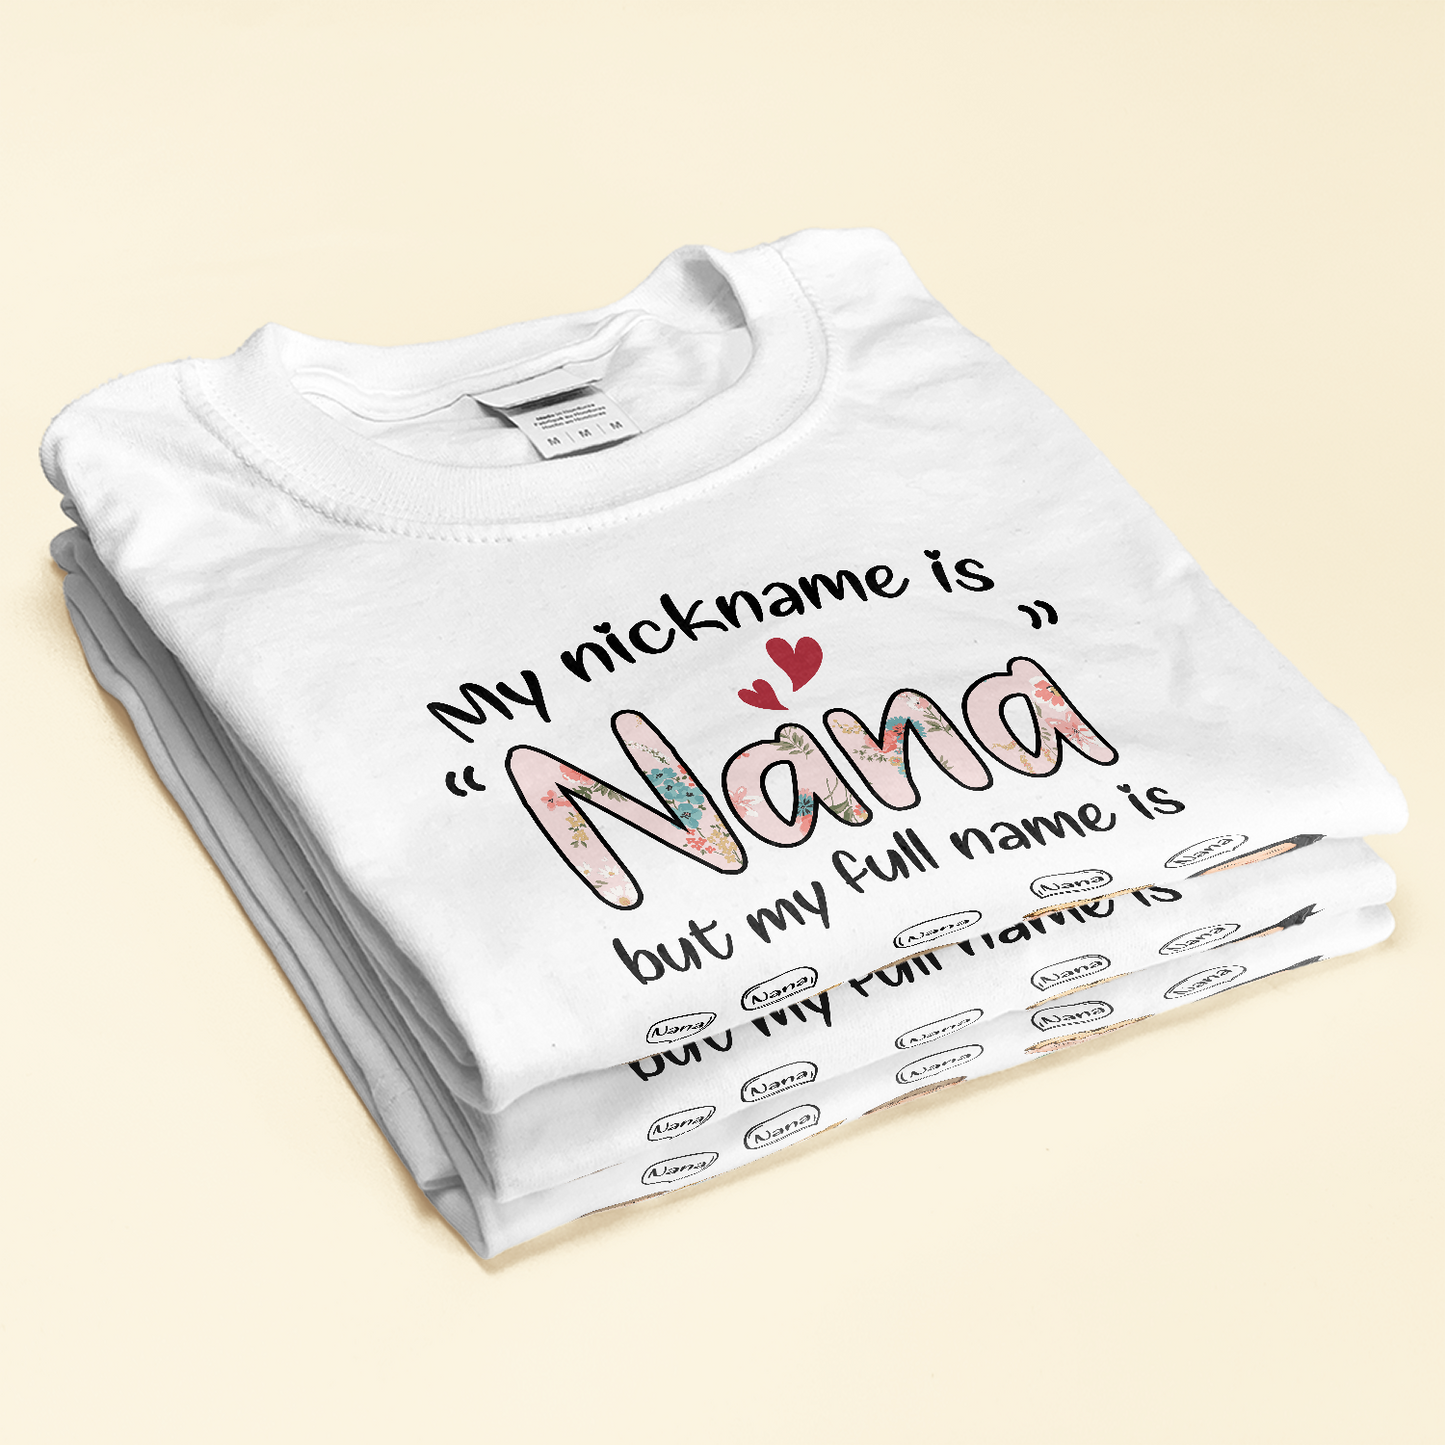 My Nickname Is Nana - Personalized Shirt